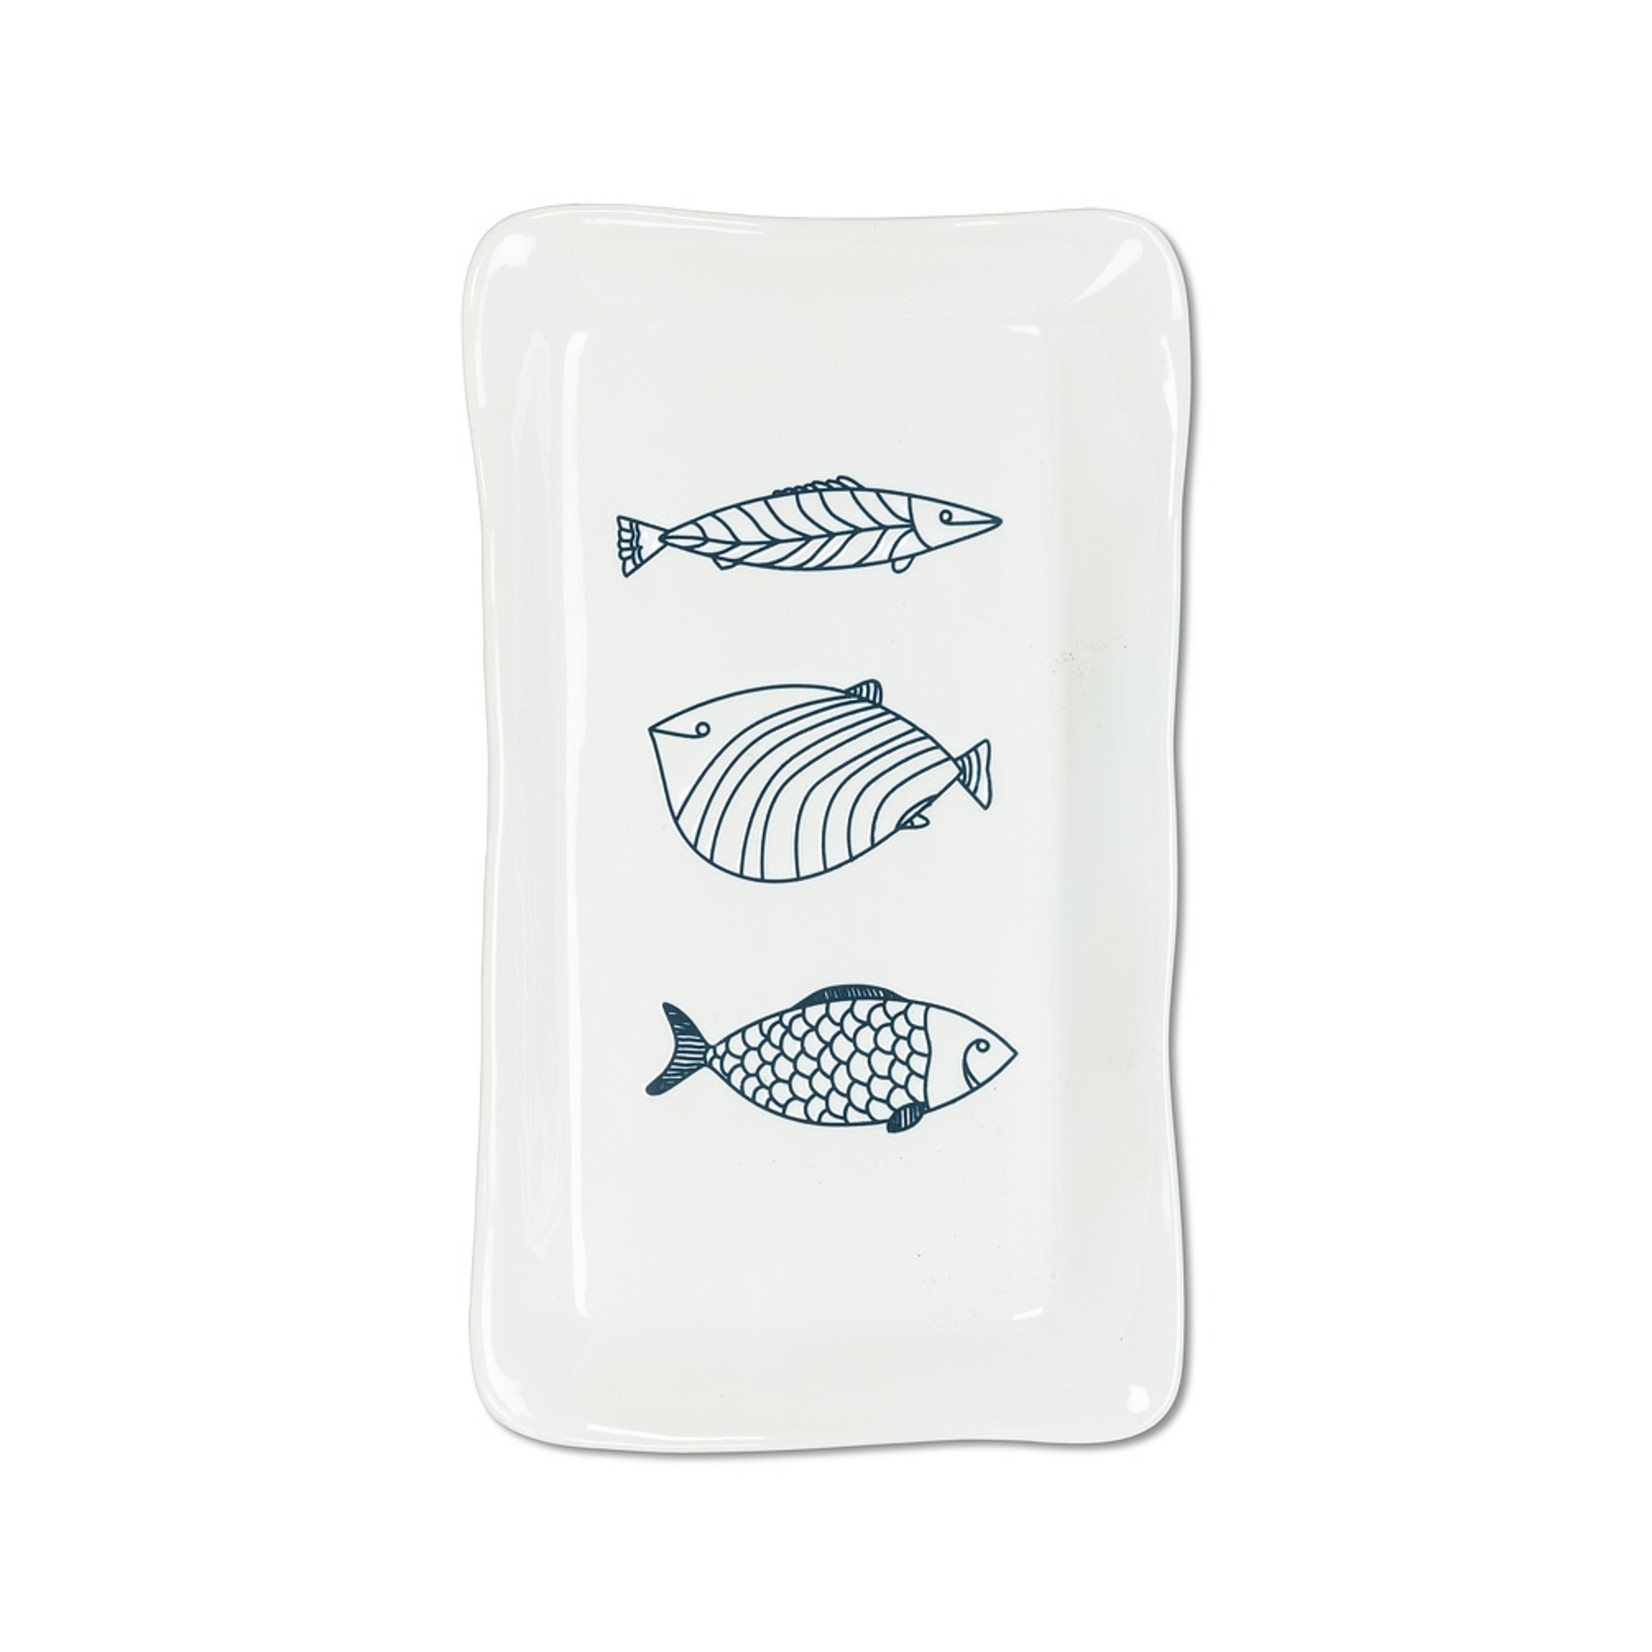 Abbott Lg Rectangle Fish Plate - 7 x 12